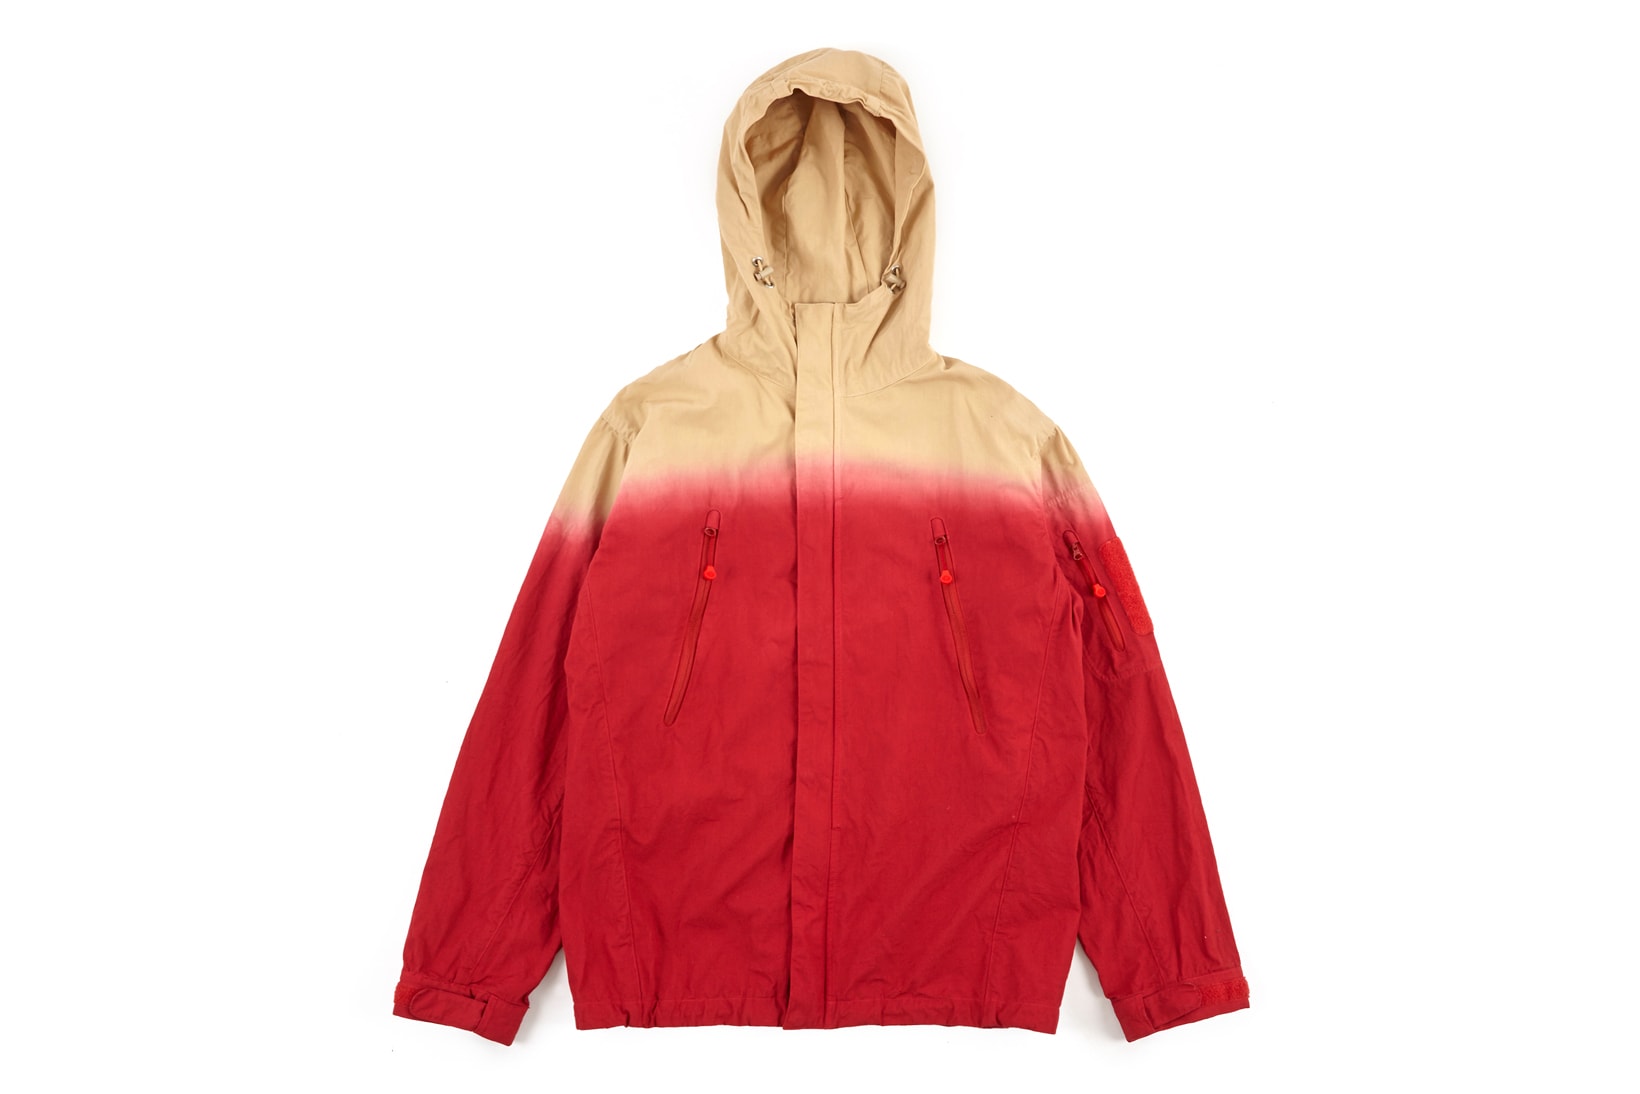 JohnUNDERCOVER Dip-Dye Hooded Jacket in Red